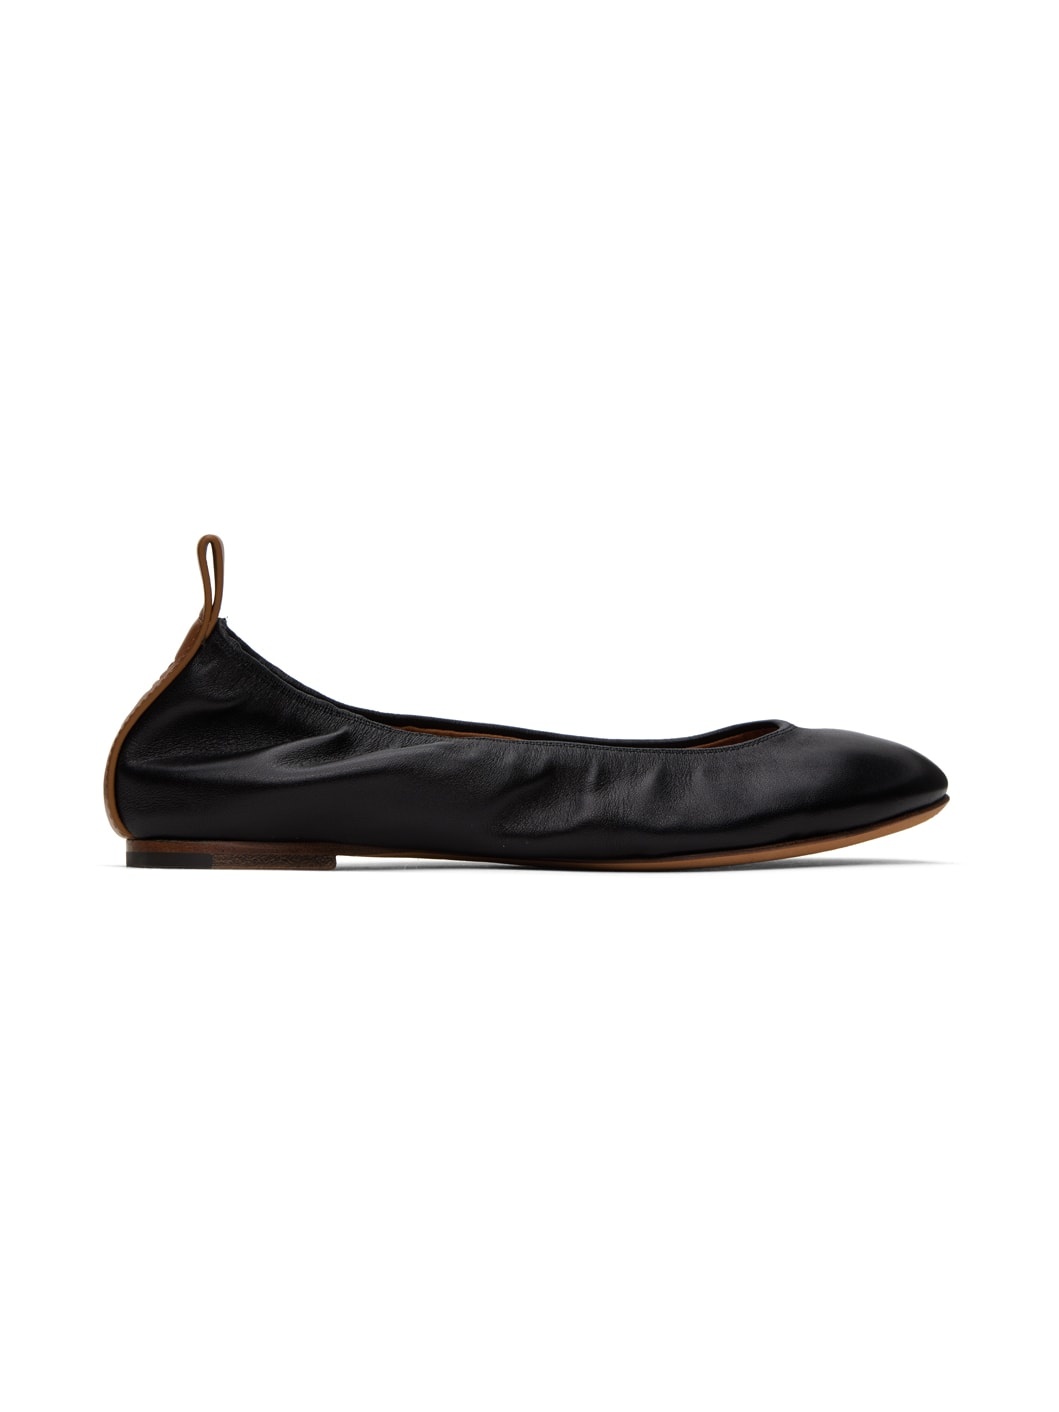 Black Leather Ballerina Flats - 1